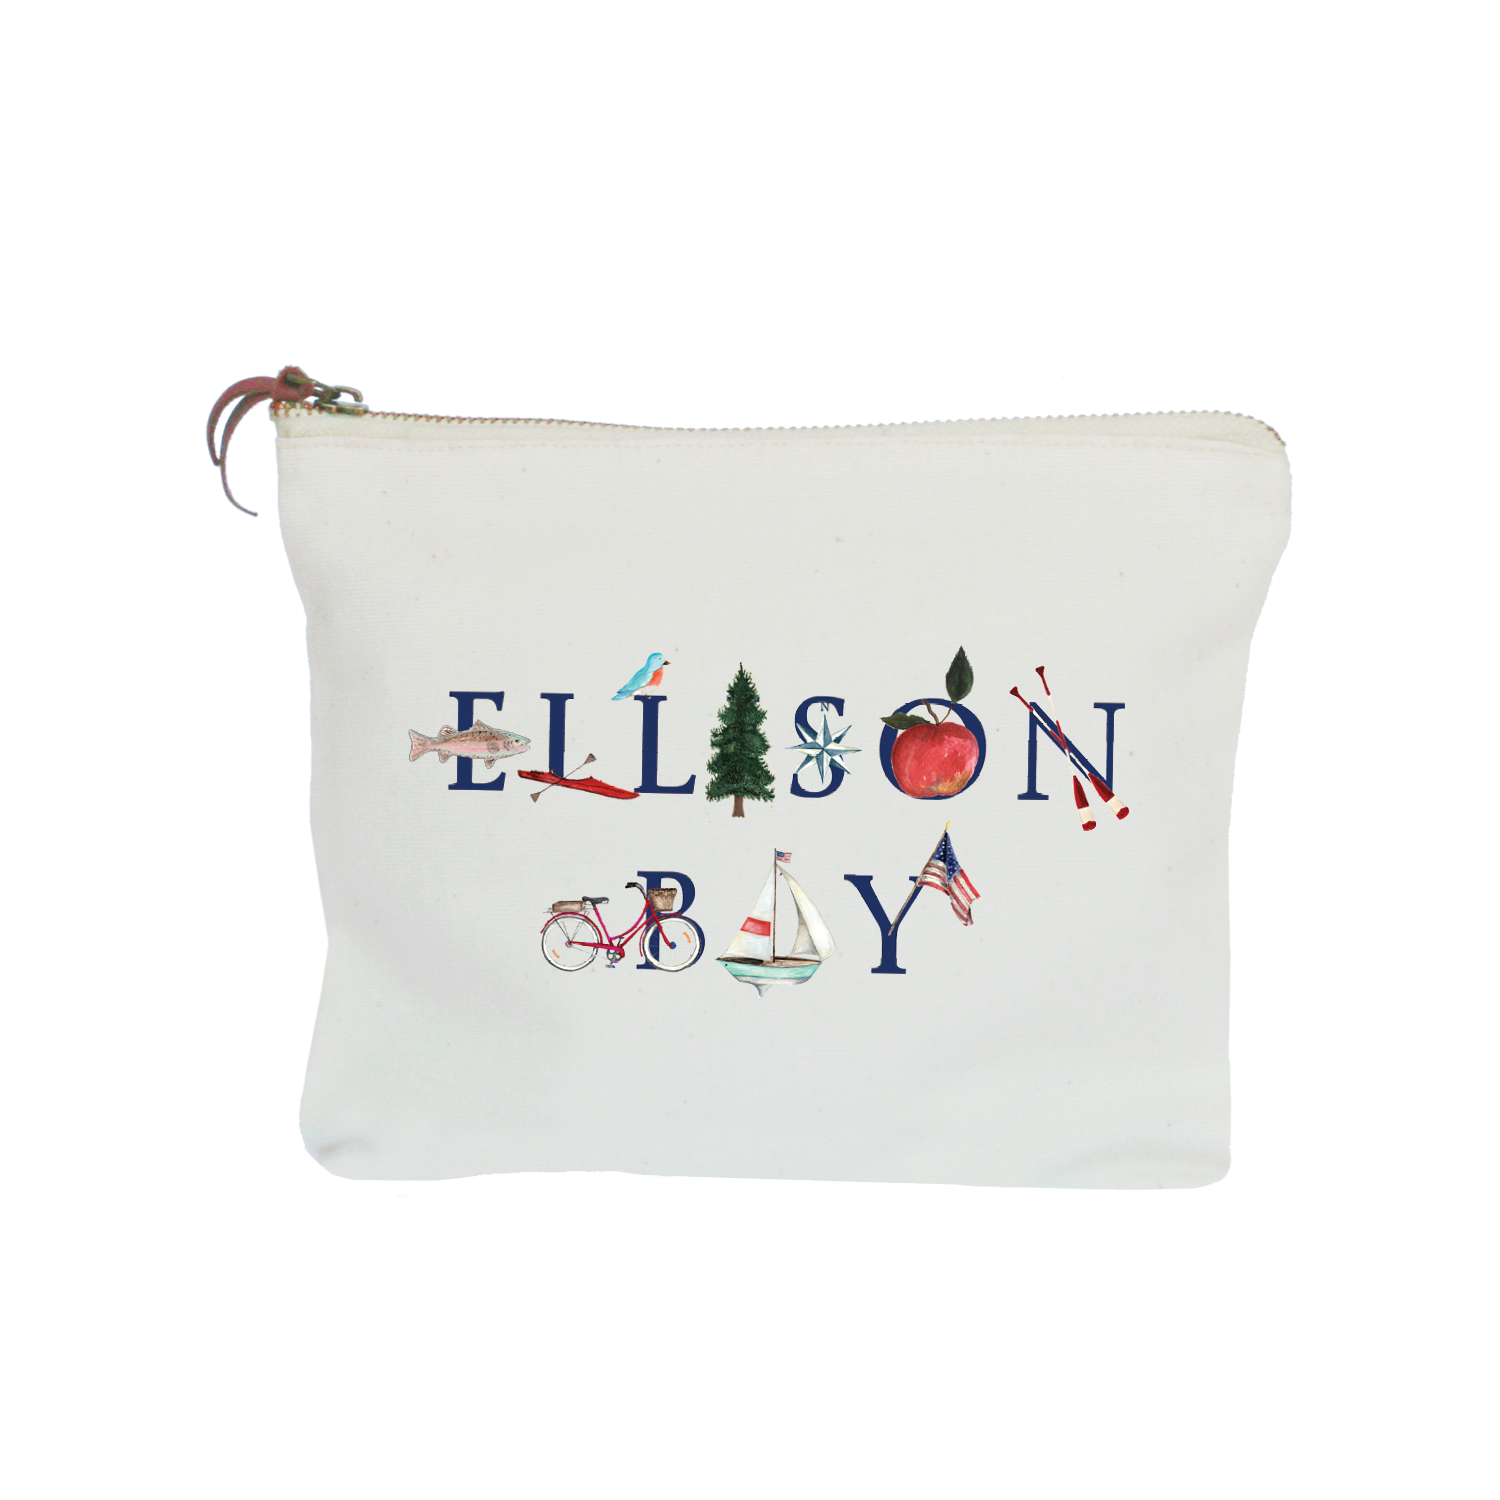 Ellison Bay zipper pouch